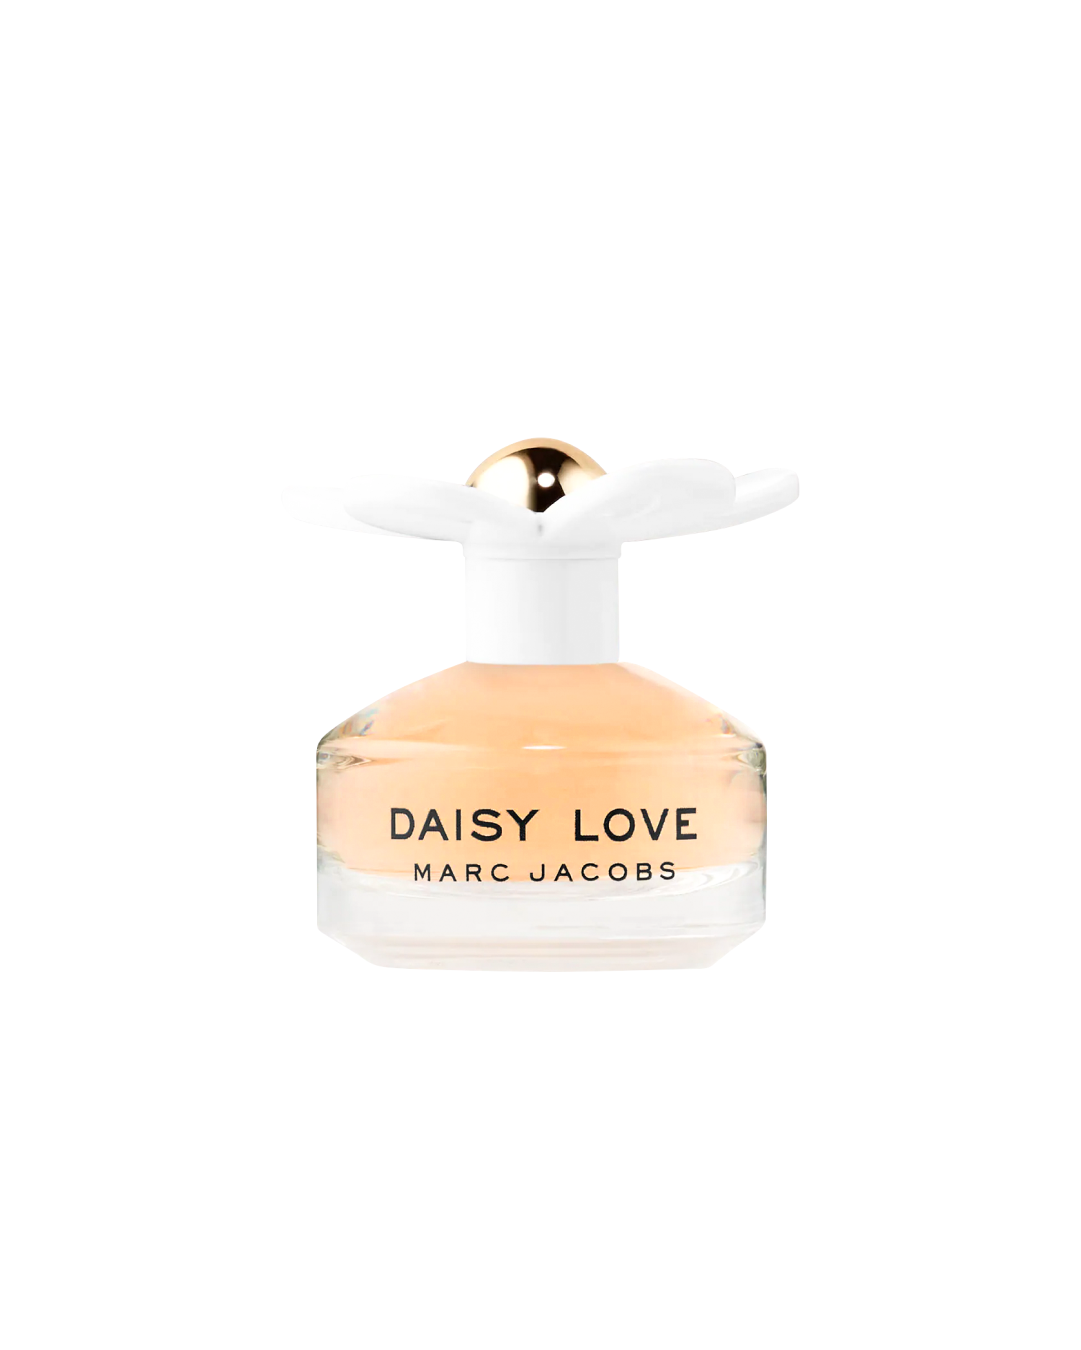 Marc Jacobs Daisy Love EDT Mini (4ml) - Best Buy World Philippines